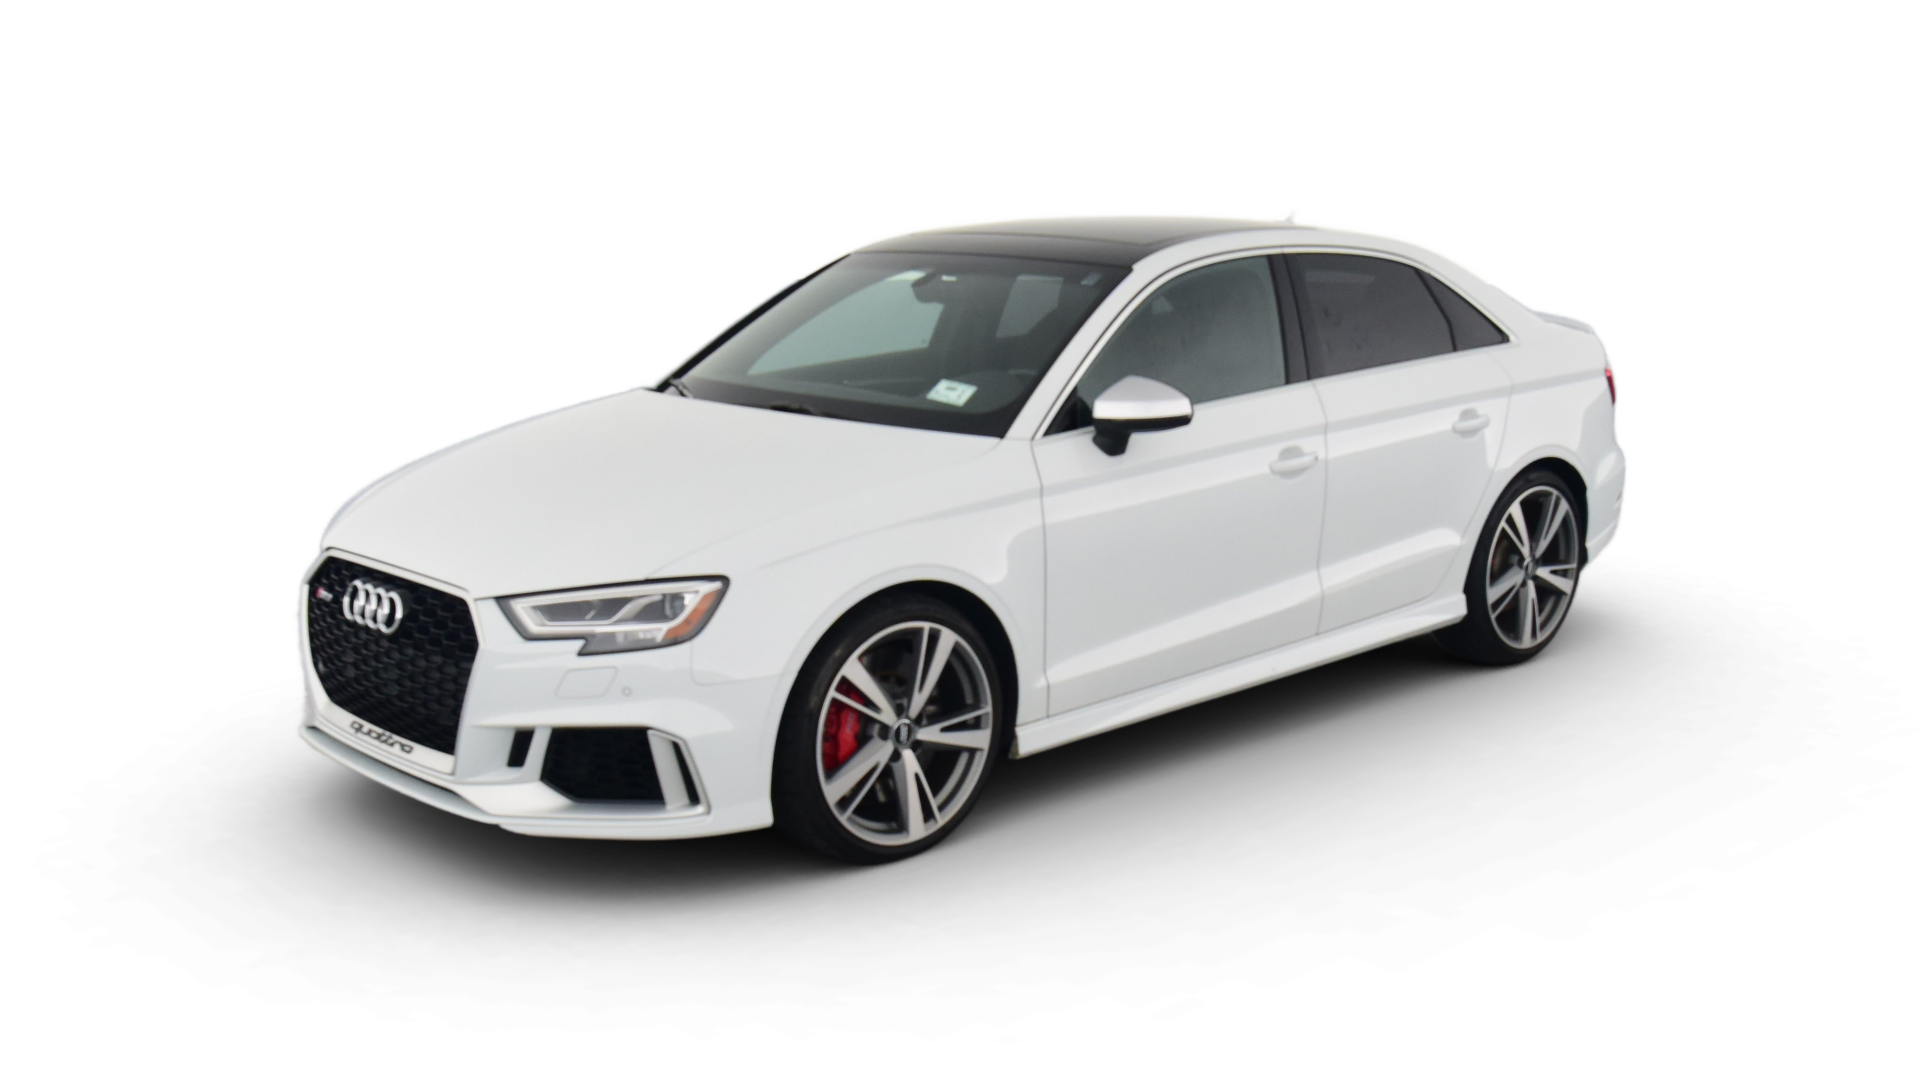 Audi RS 3 model image.